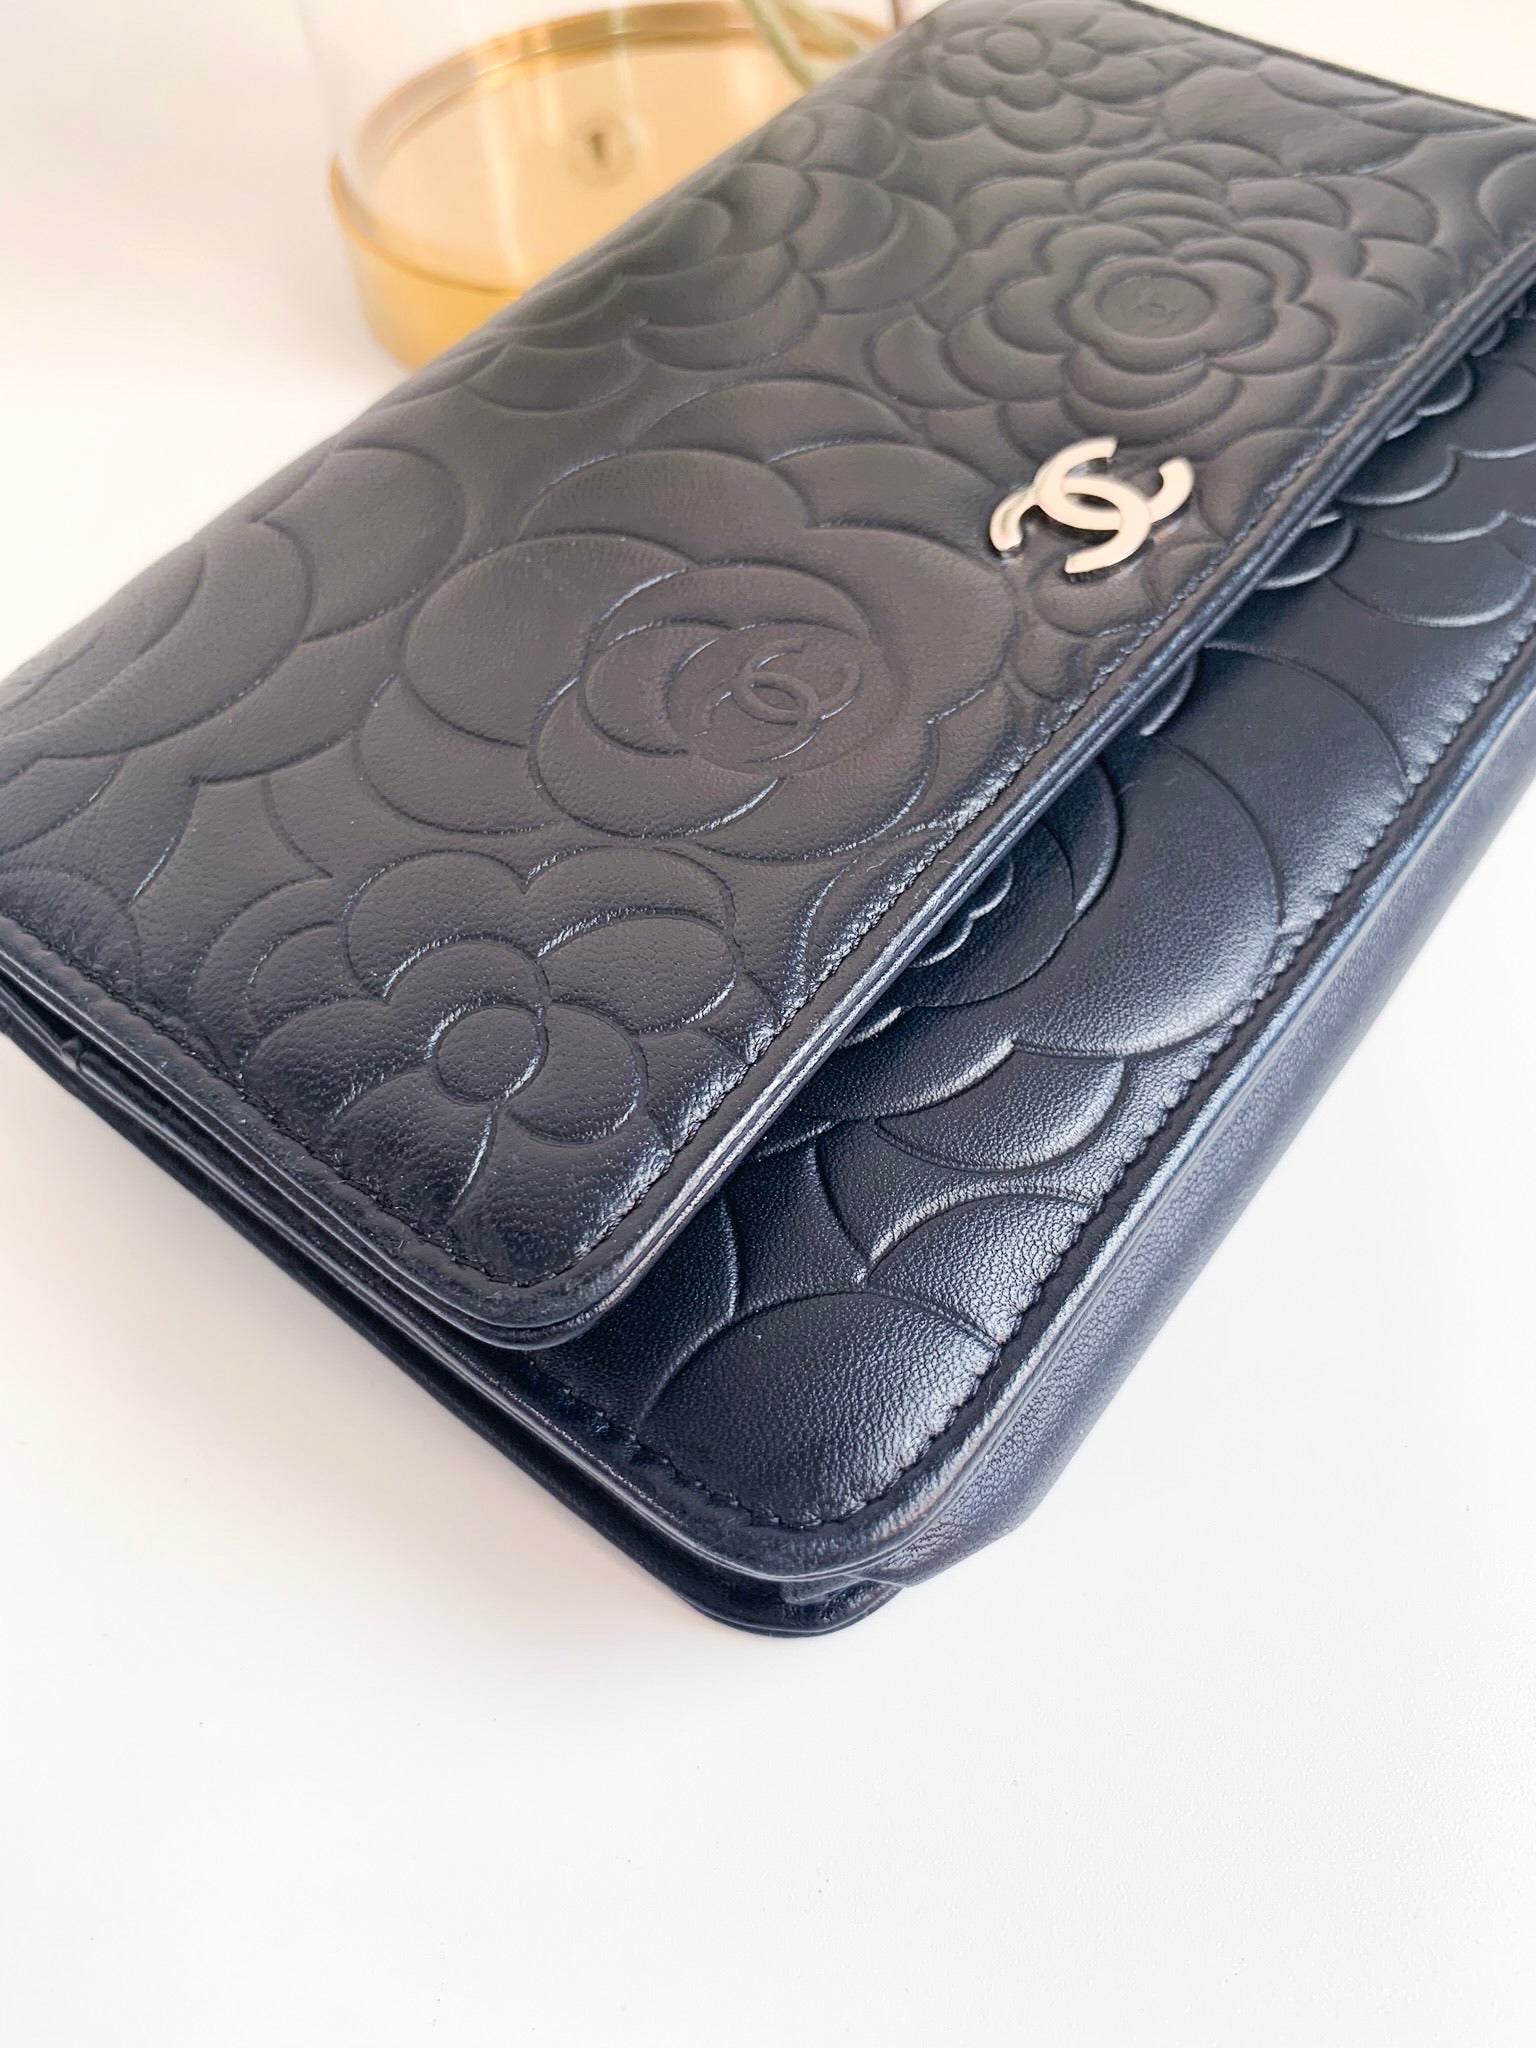 Chanel Lambskin Camellia Embossed Wallet On Chain WOC Black